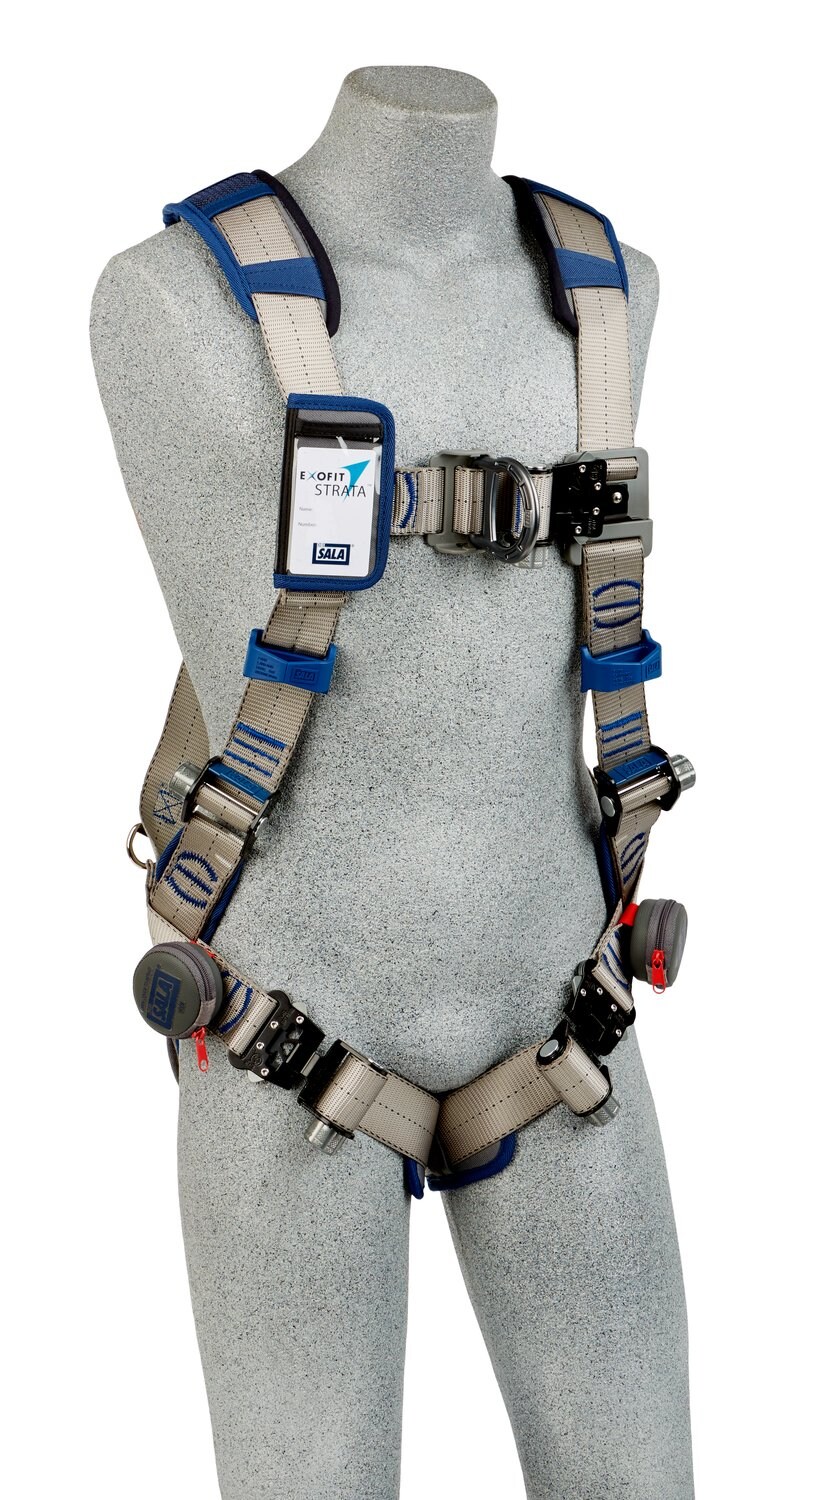 7100204297 - 3M DBI-SALA ExoFit STRATA Comfort Vest Climbing Safety Harness
1112487, Large